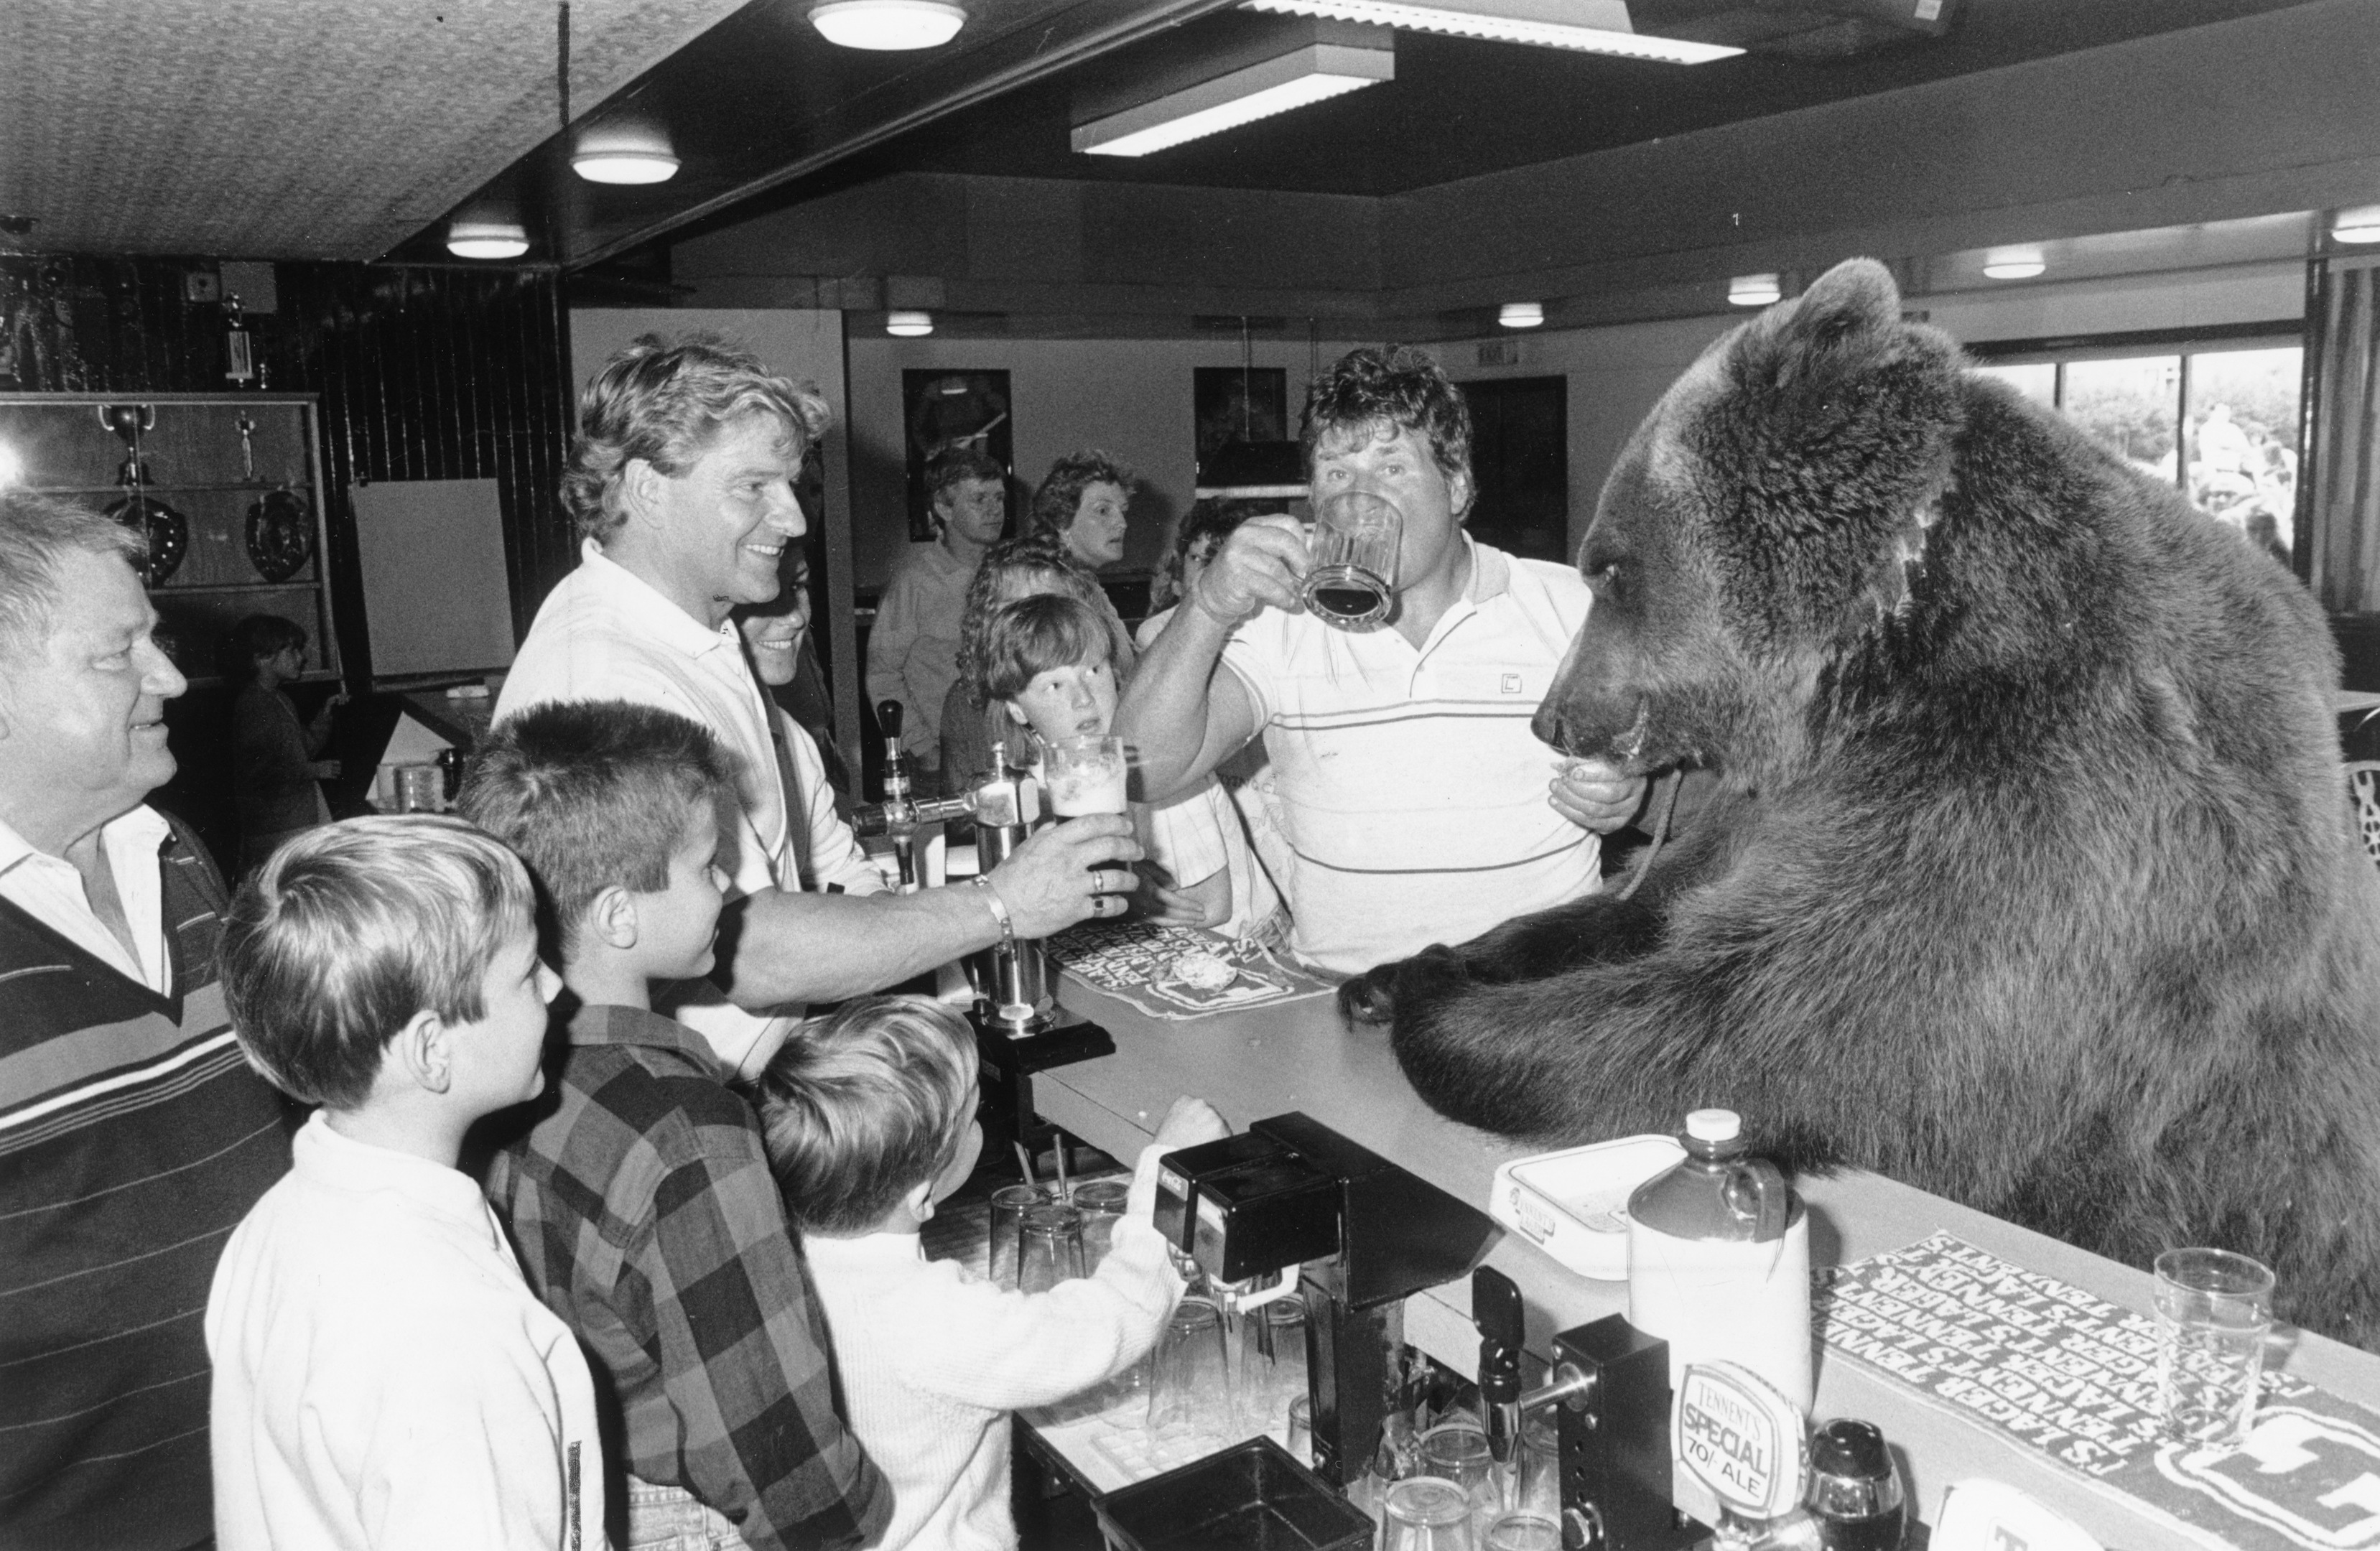 And-a-pint-for-the-bear-barman.jpg